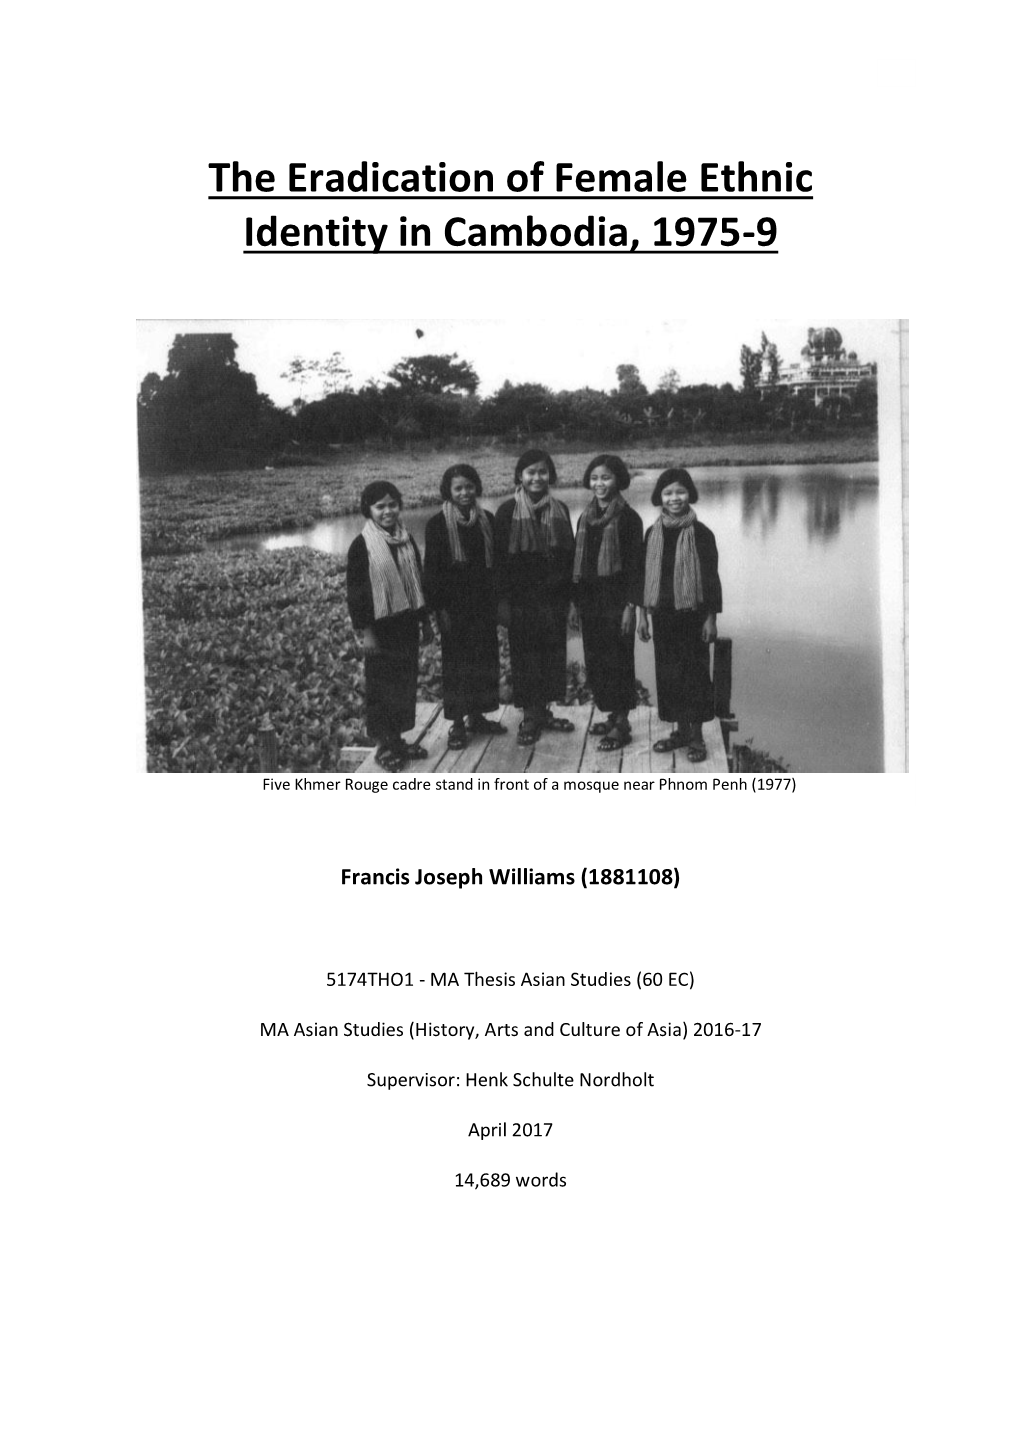 The Eradication of Female Ethnic Identity in Cambodia, 1975-9